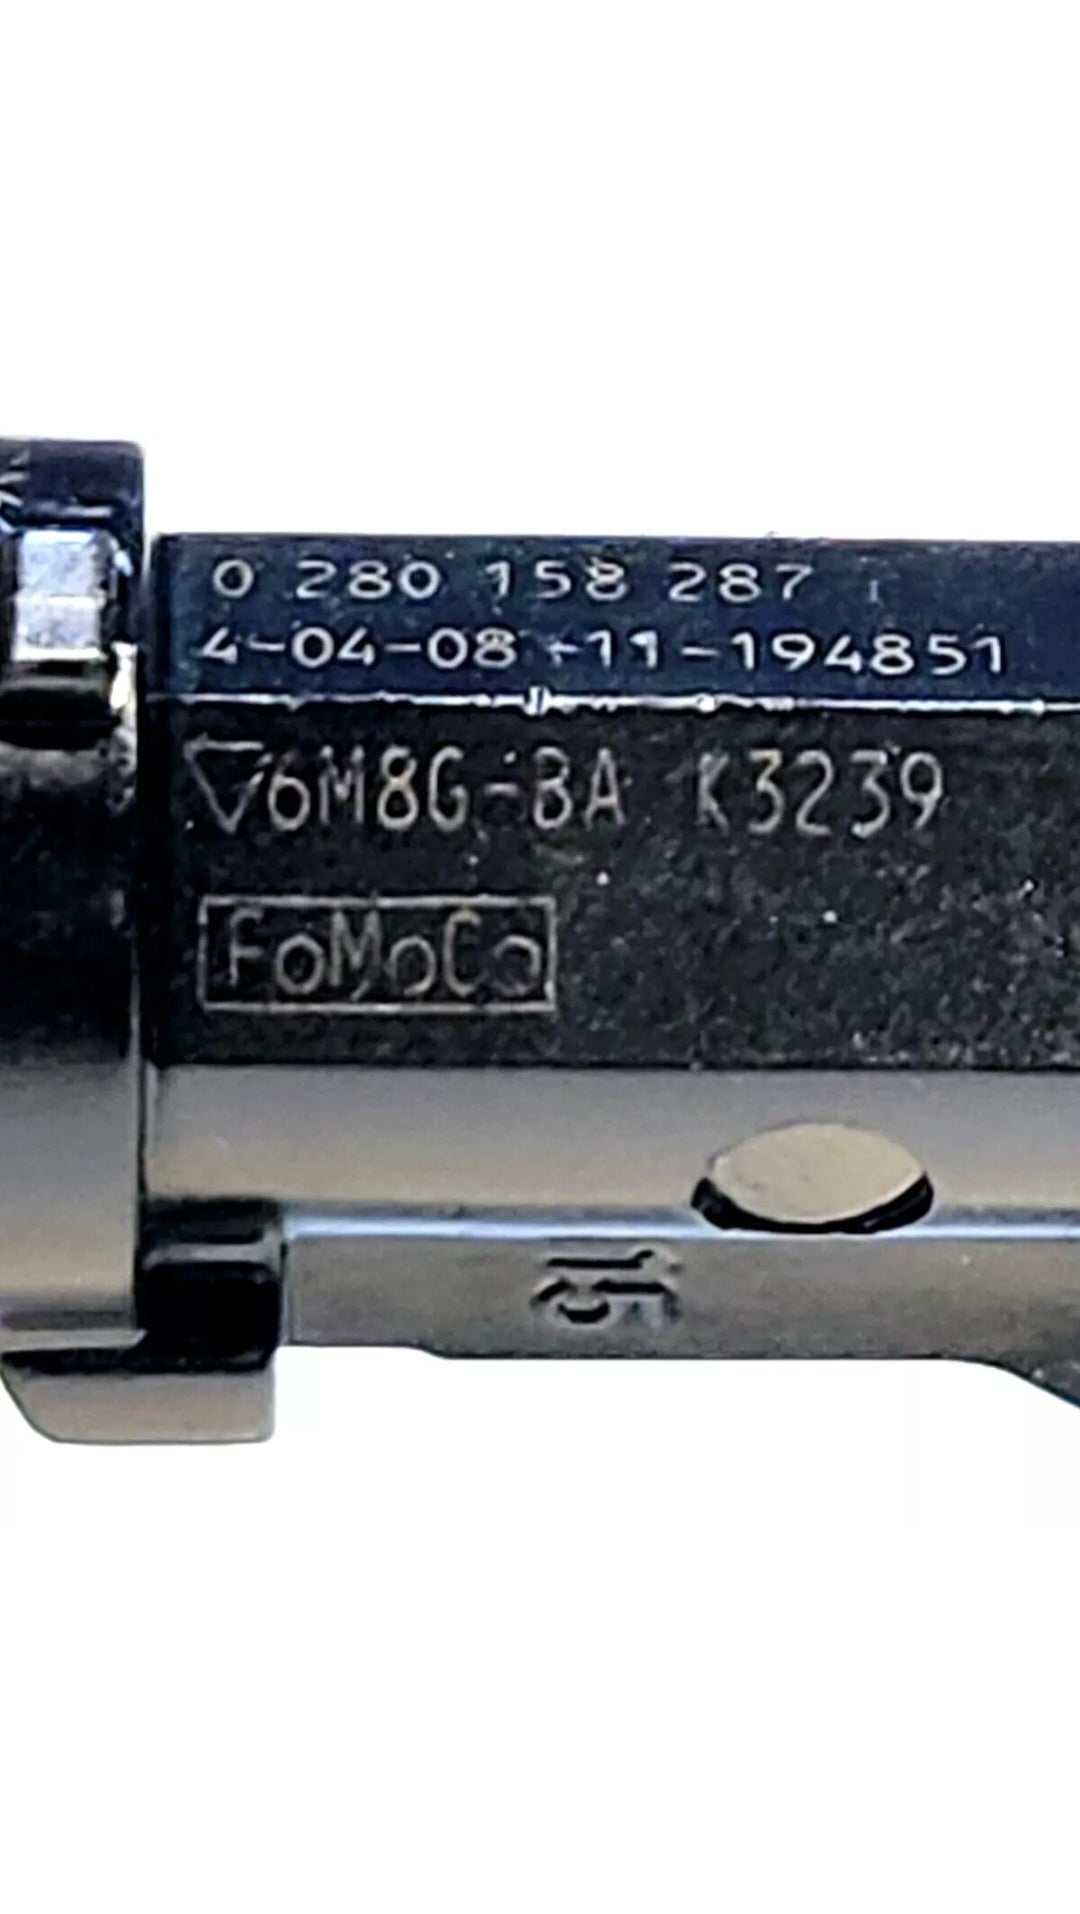 4 Genuine Bosch 0280158287 / 6M8G-BA fuel injectors